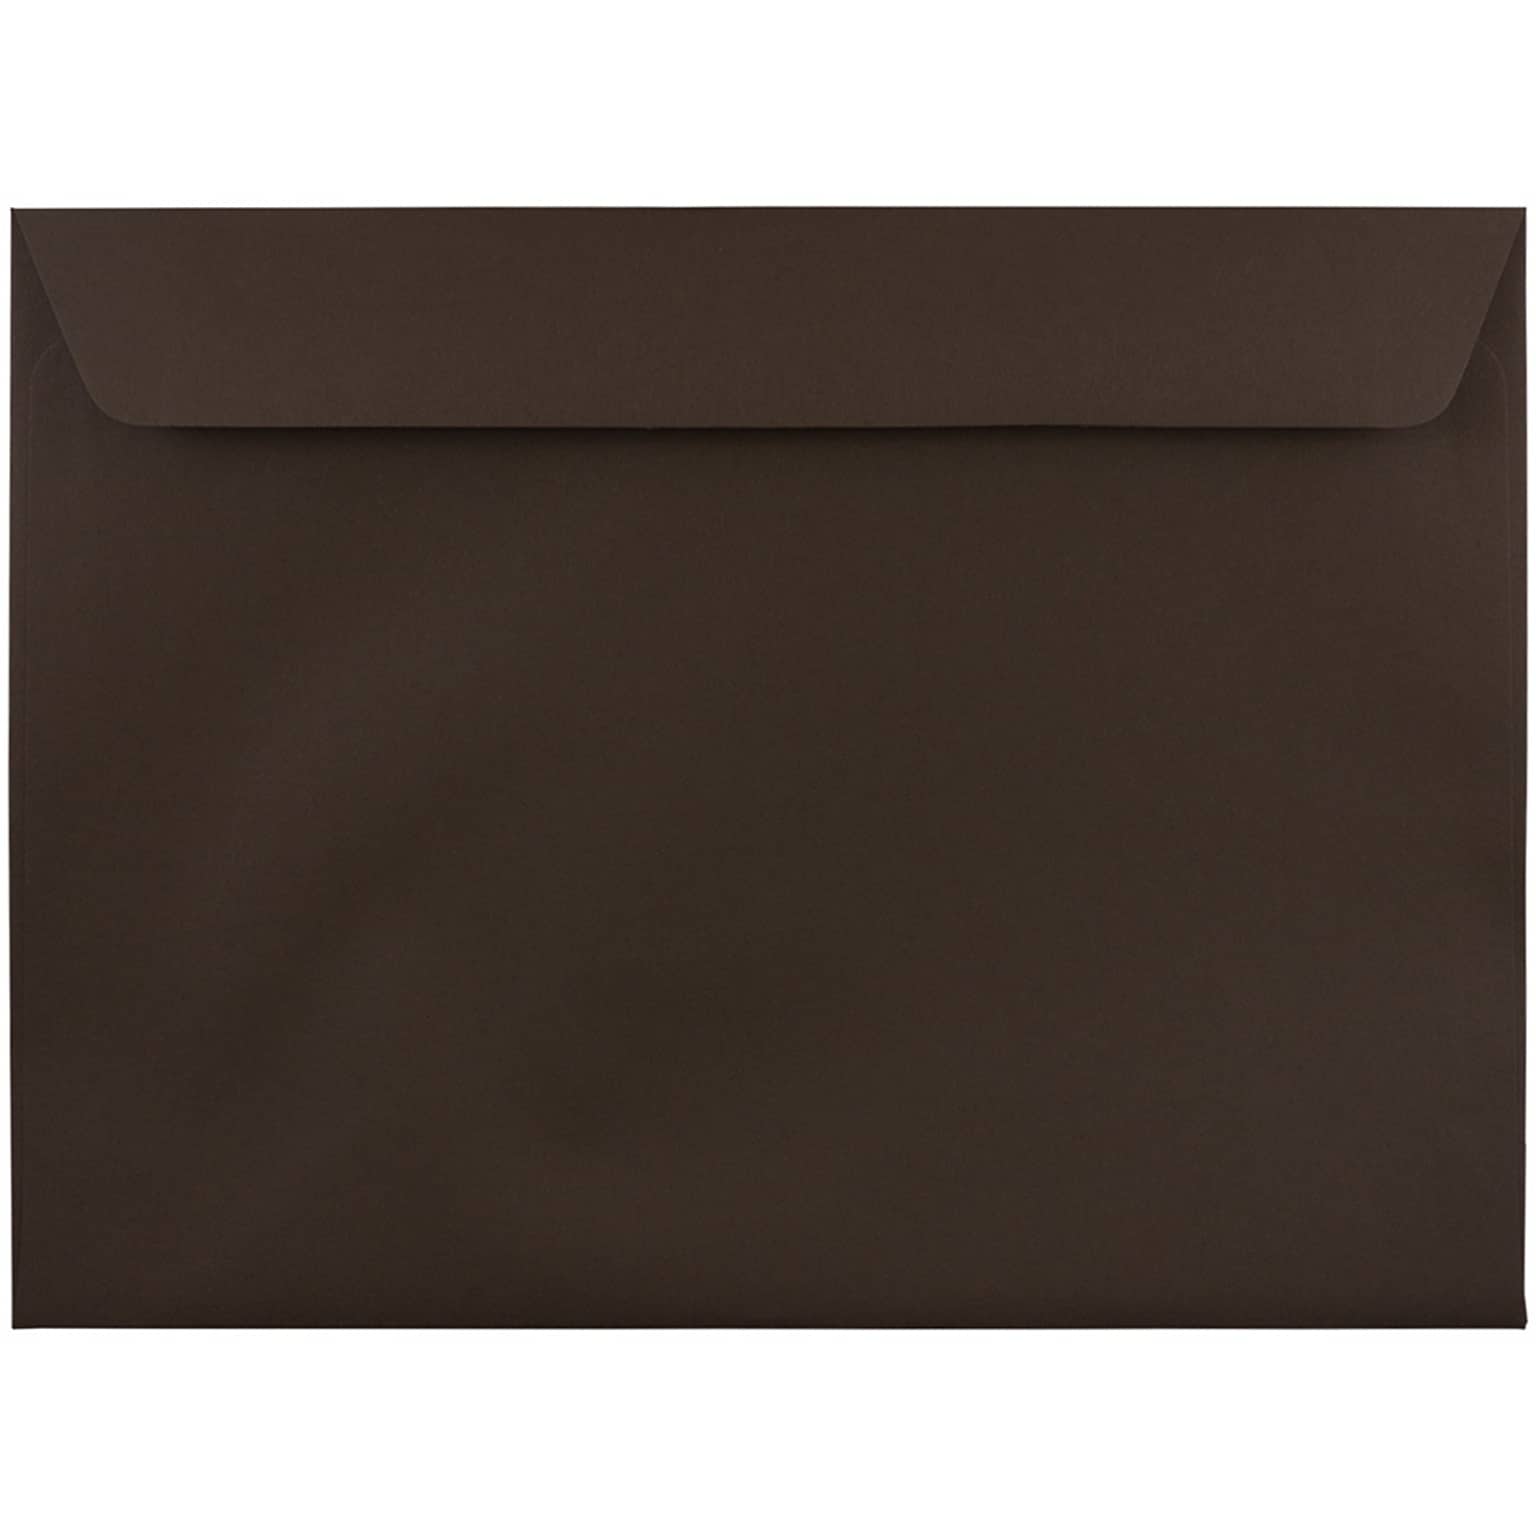 JAM Paper Booklet Envelope, 9 1/2 x 12 5/8, Chocolate Brown, 25/Pack (233721)